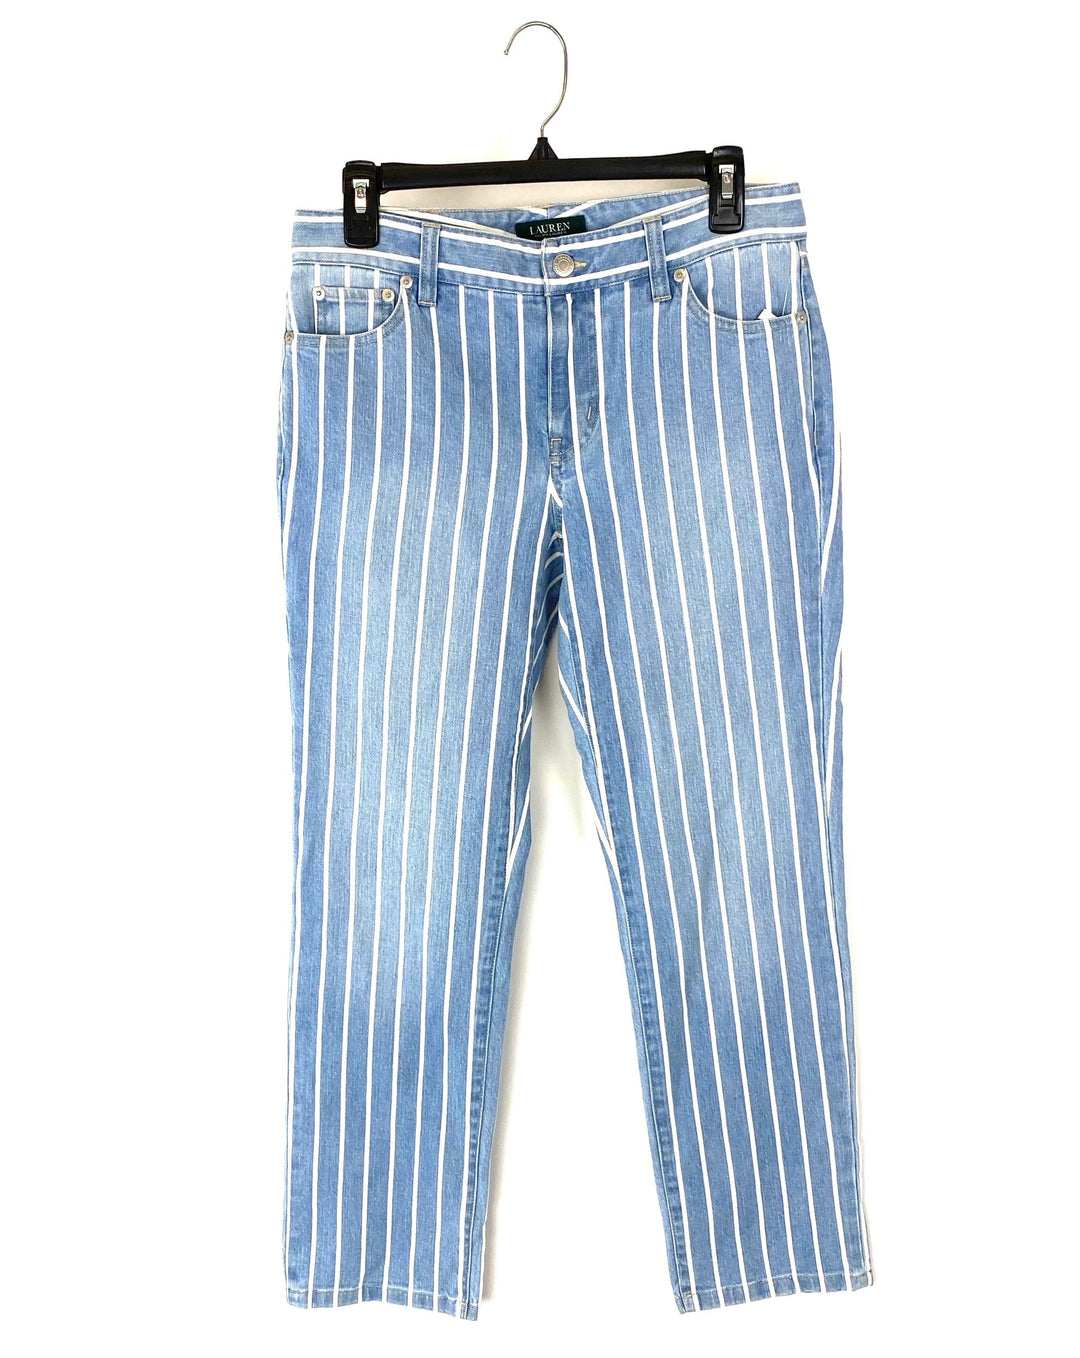 Low Rise Light Denim Striped Jeans - Size 4